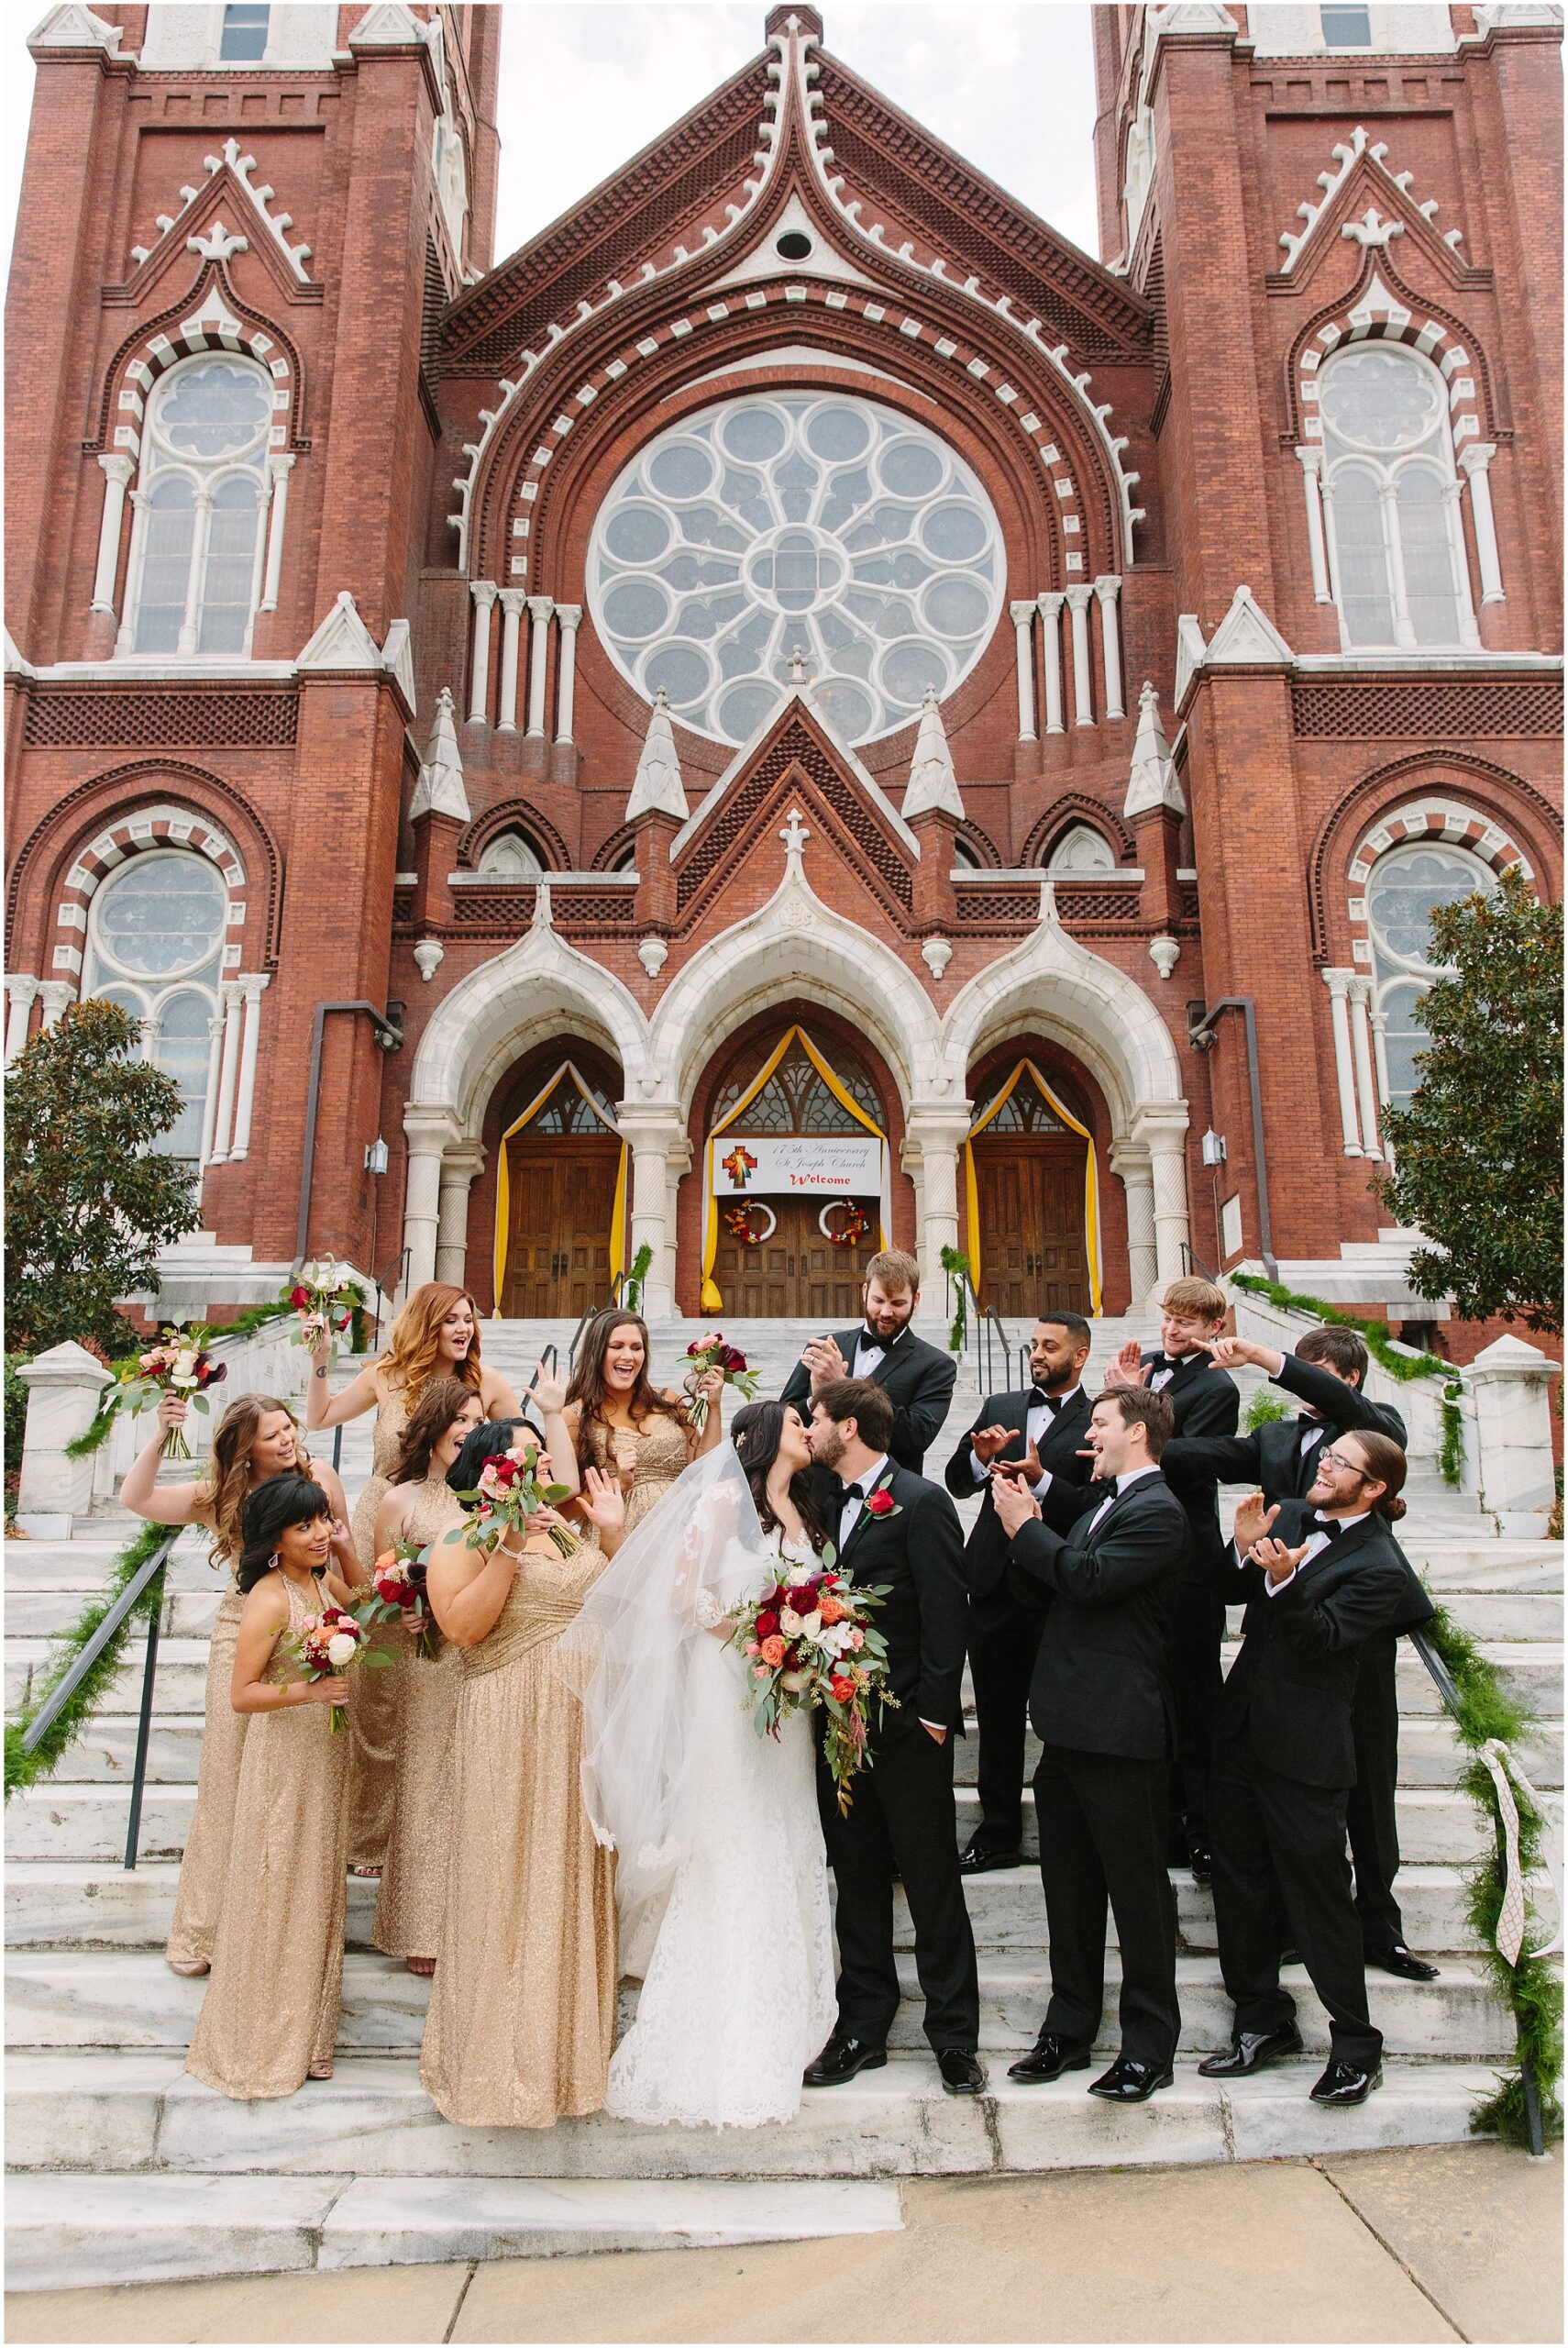 St. Joseph's Catholic Church and The Blacksmith Shop Wedding | Two Chics Photography | www.twochicsphotography.com